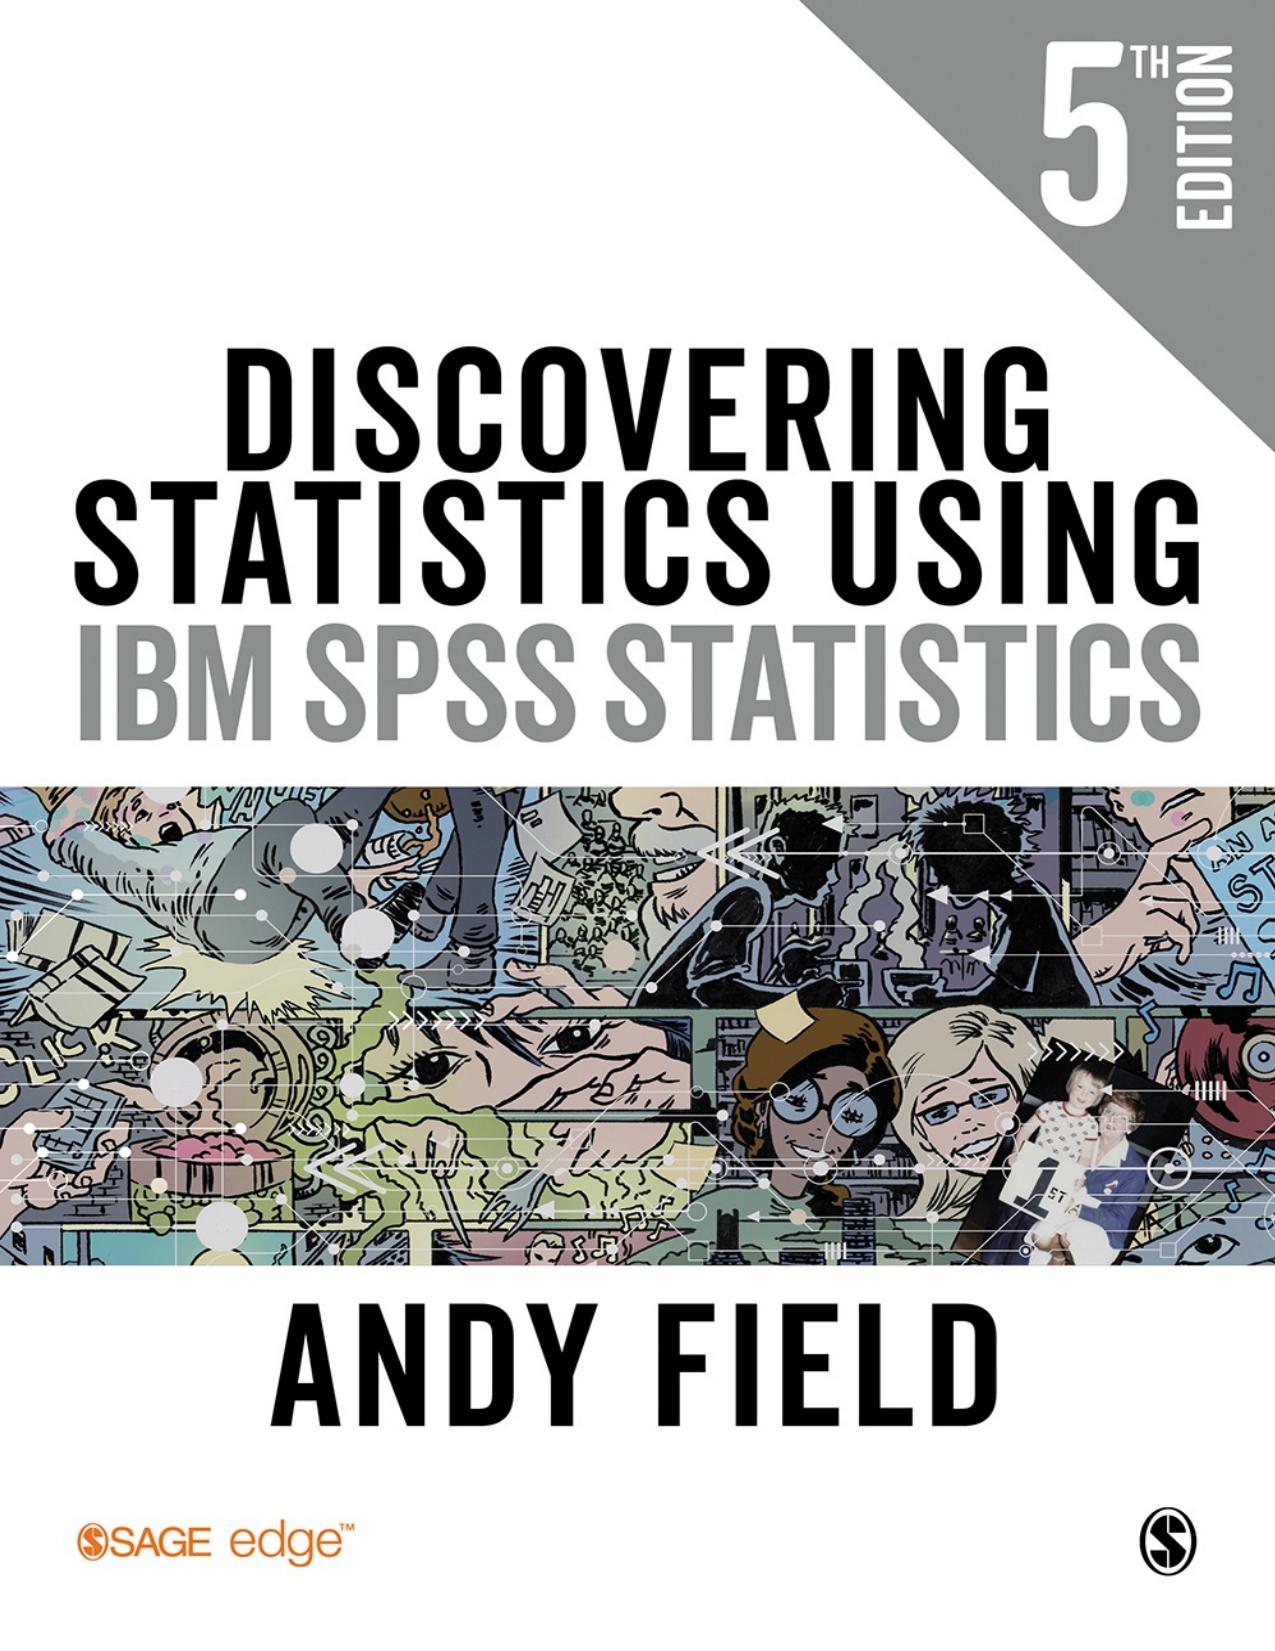 Discovering Statistics Using IBM SPSS Statistics - PDFDrive.com